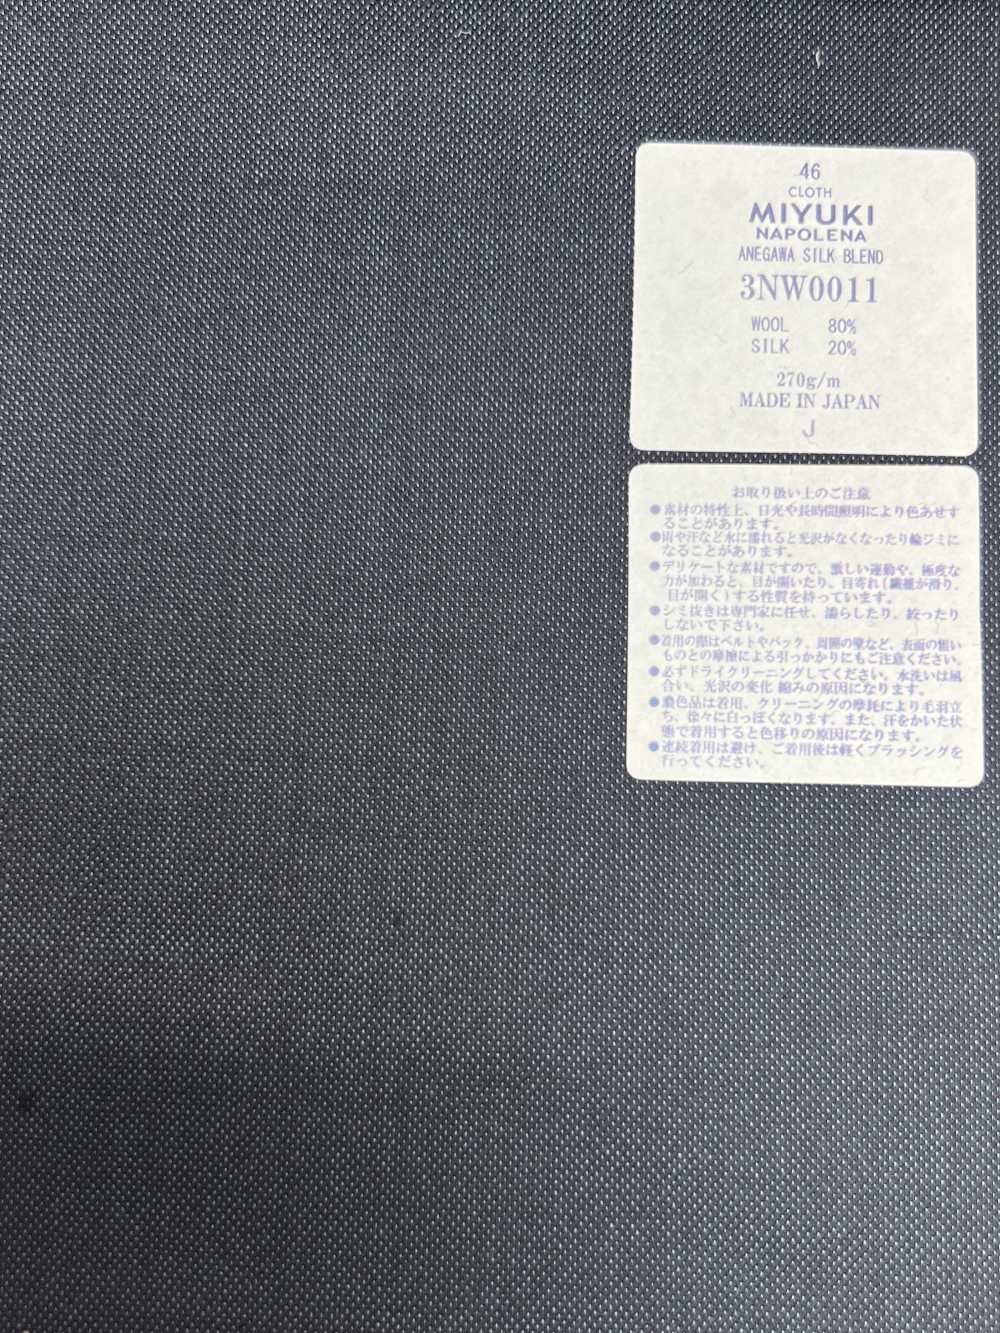 3NW0011 KREATIVE LINIE ANEGAWA SEIDENMISCHUNG Marineblau[Textil] Miyuki-Keori (Miyuki)